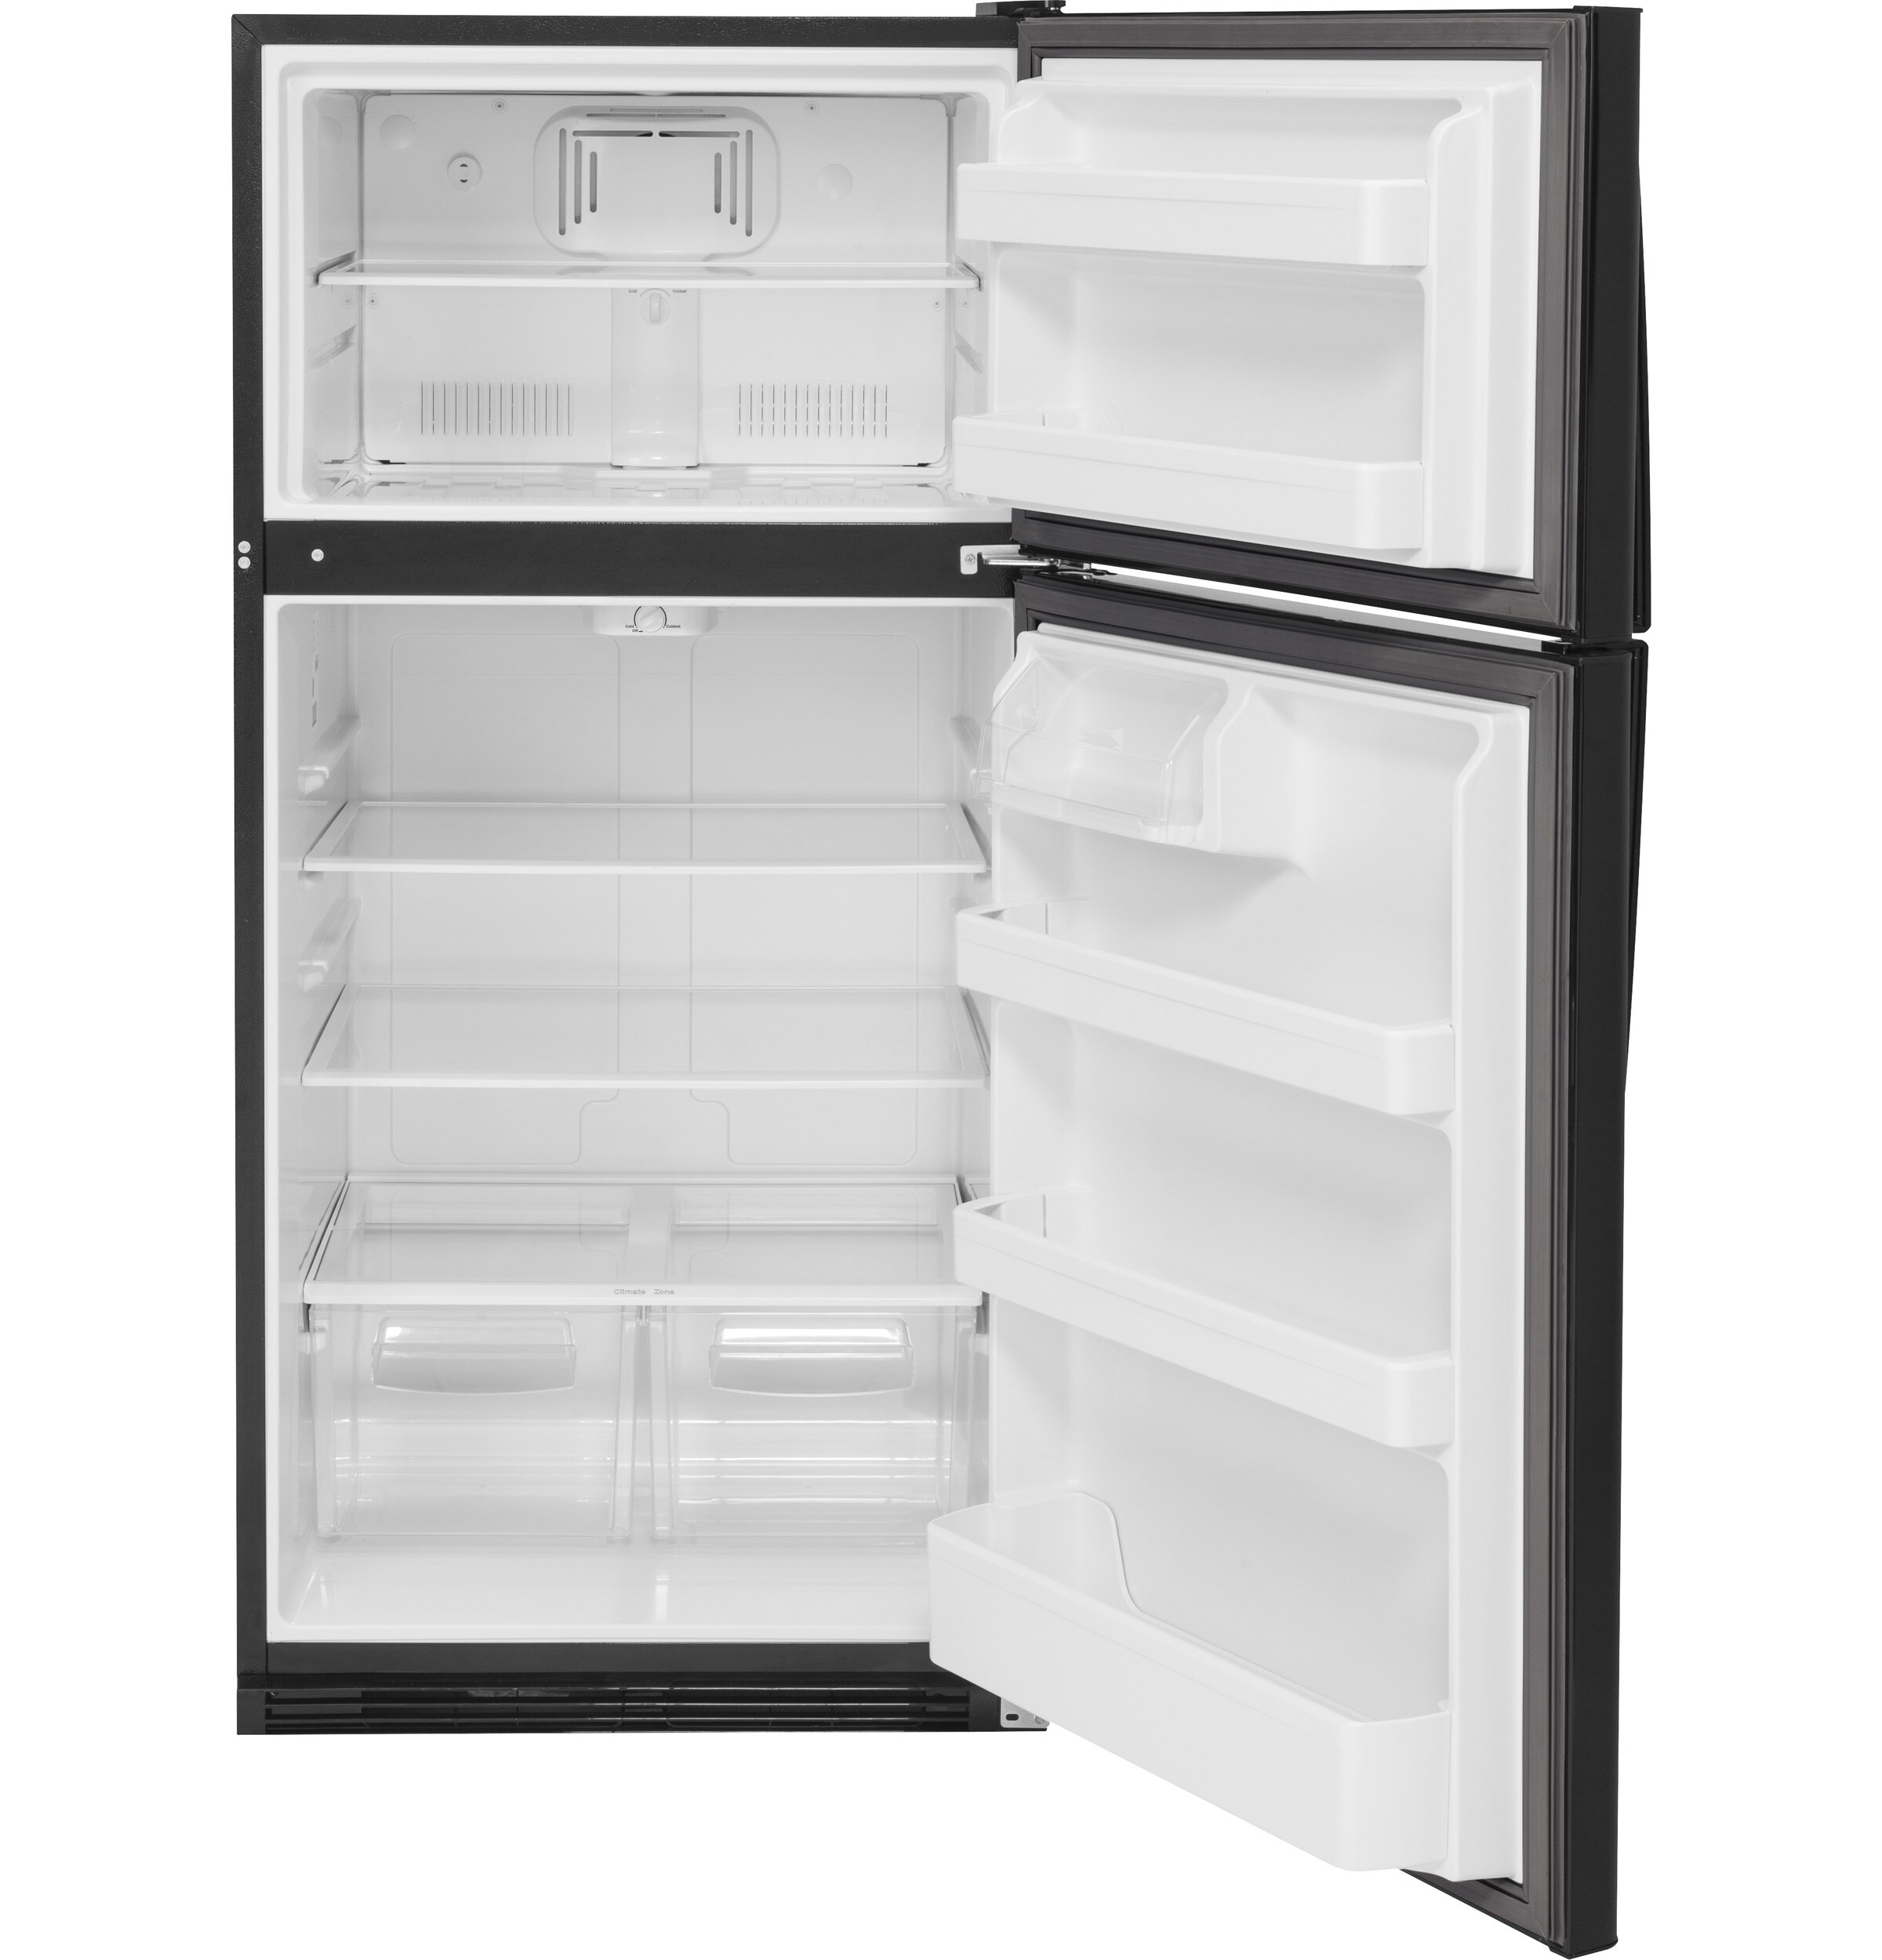 GE 20.8-cu ft Top-Freezer Refrigerator (Black) at Lowes.com